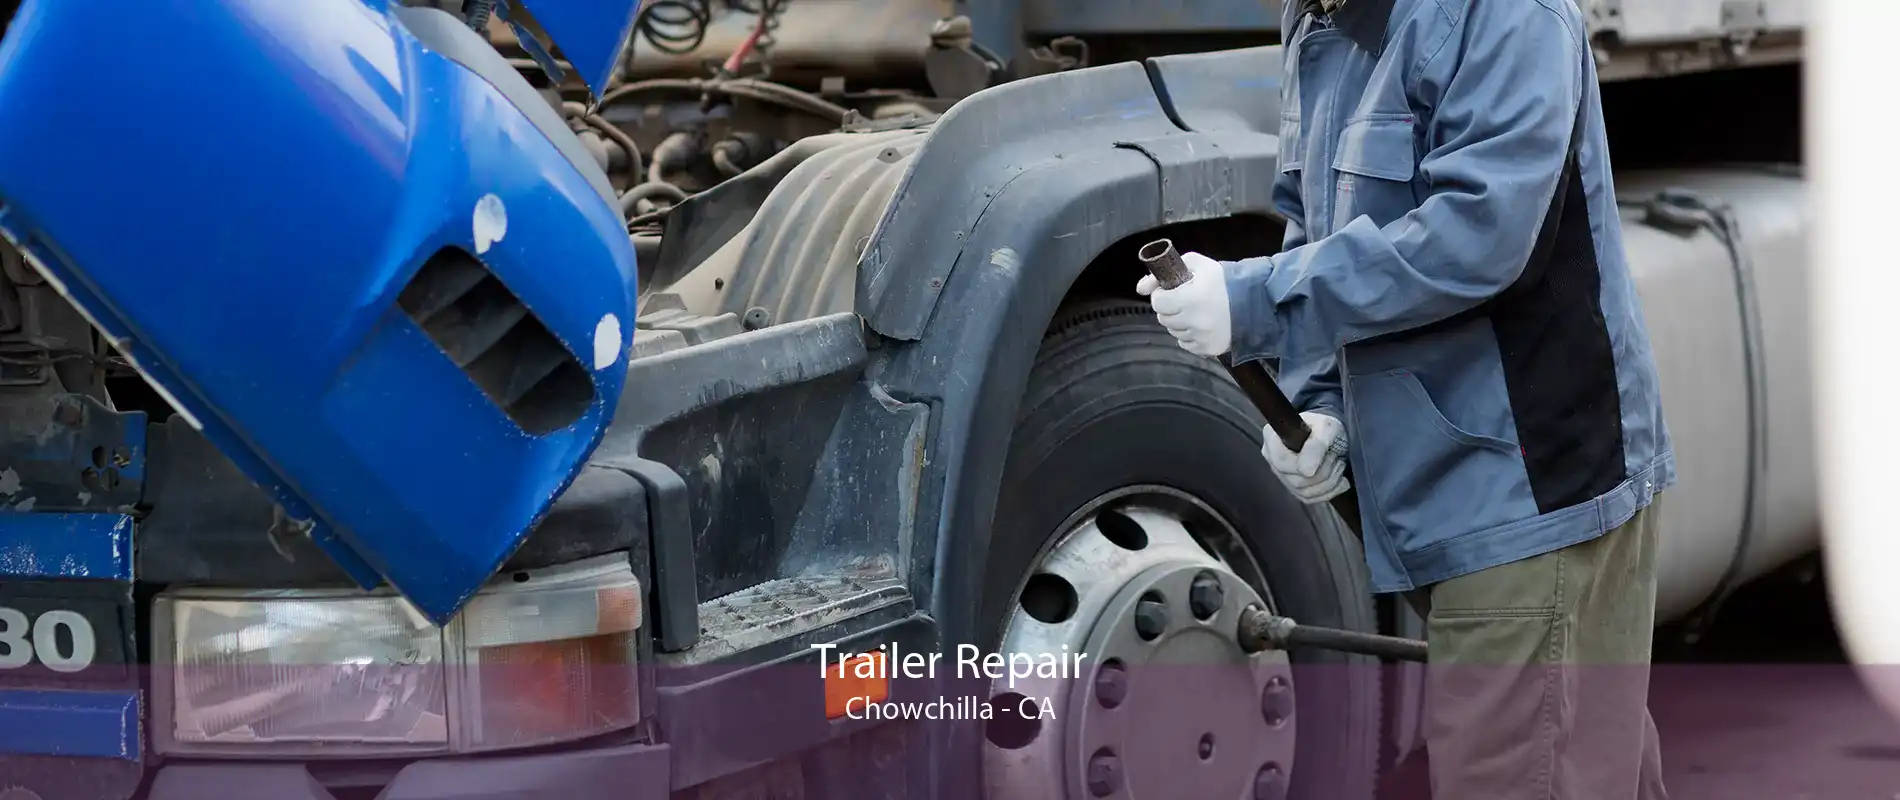 Trailer Repair Chowchilla - CA